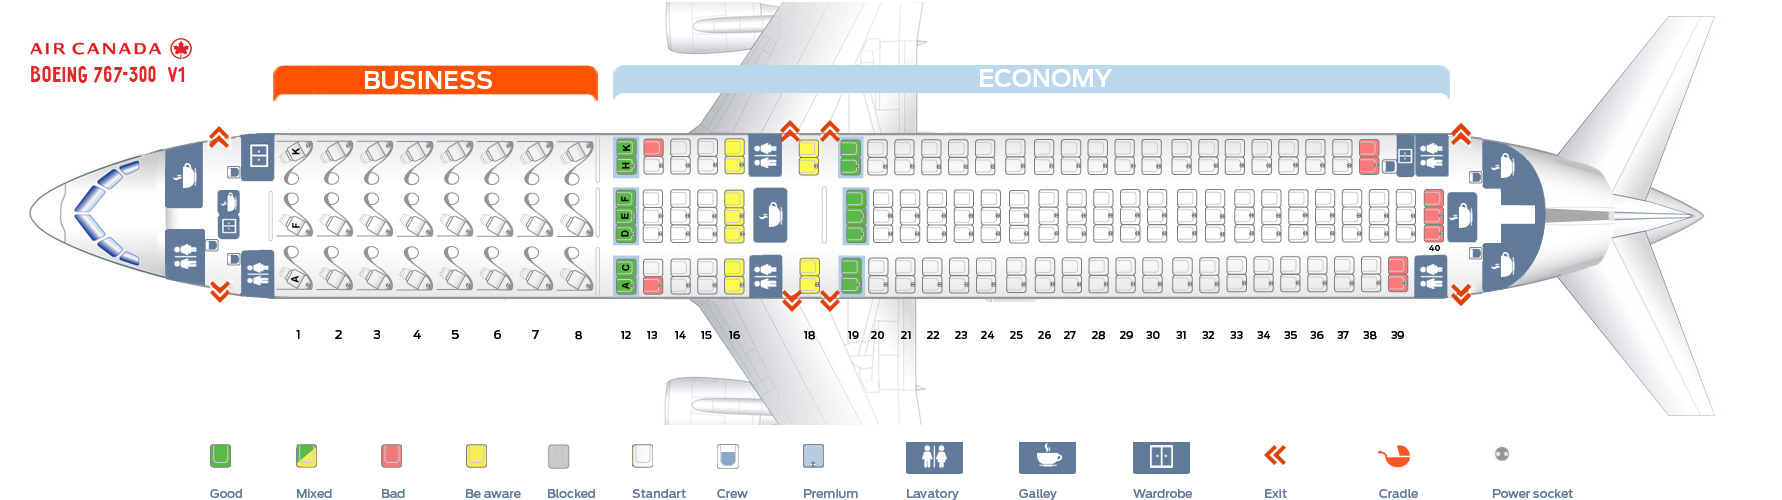 Air Canada Seating Chart